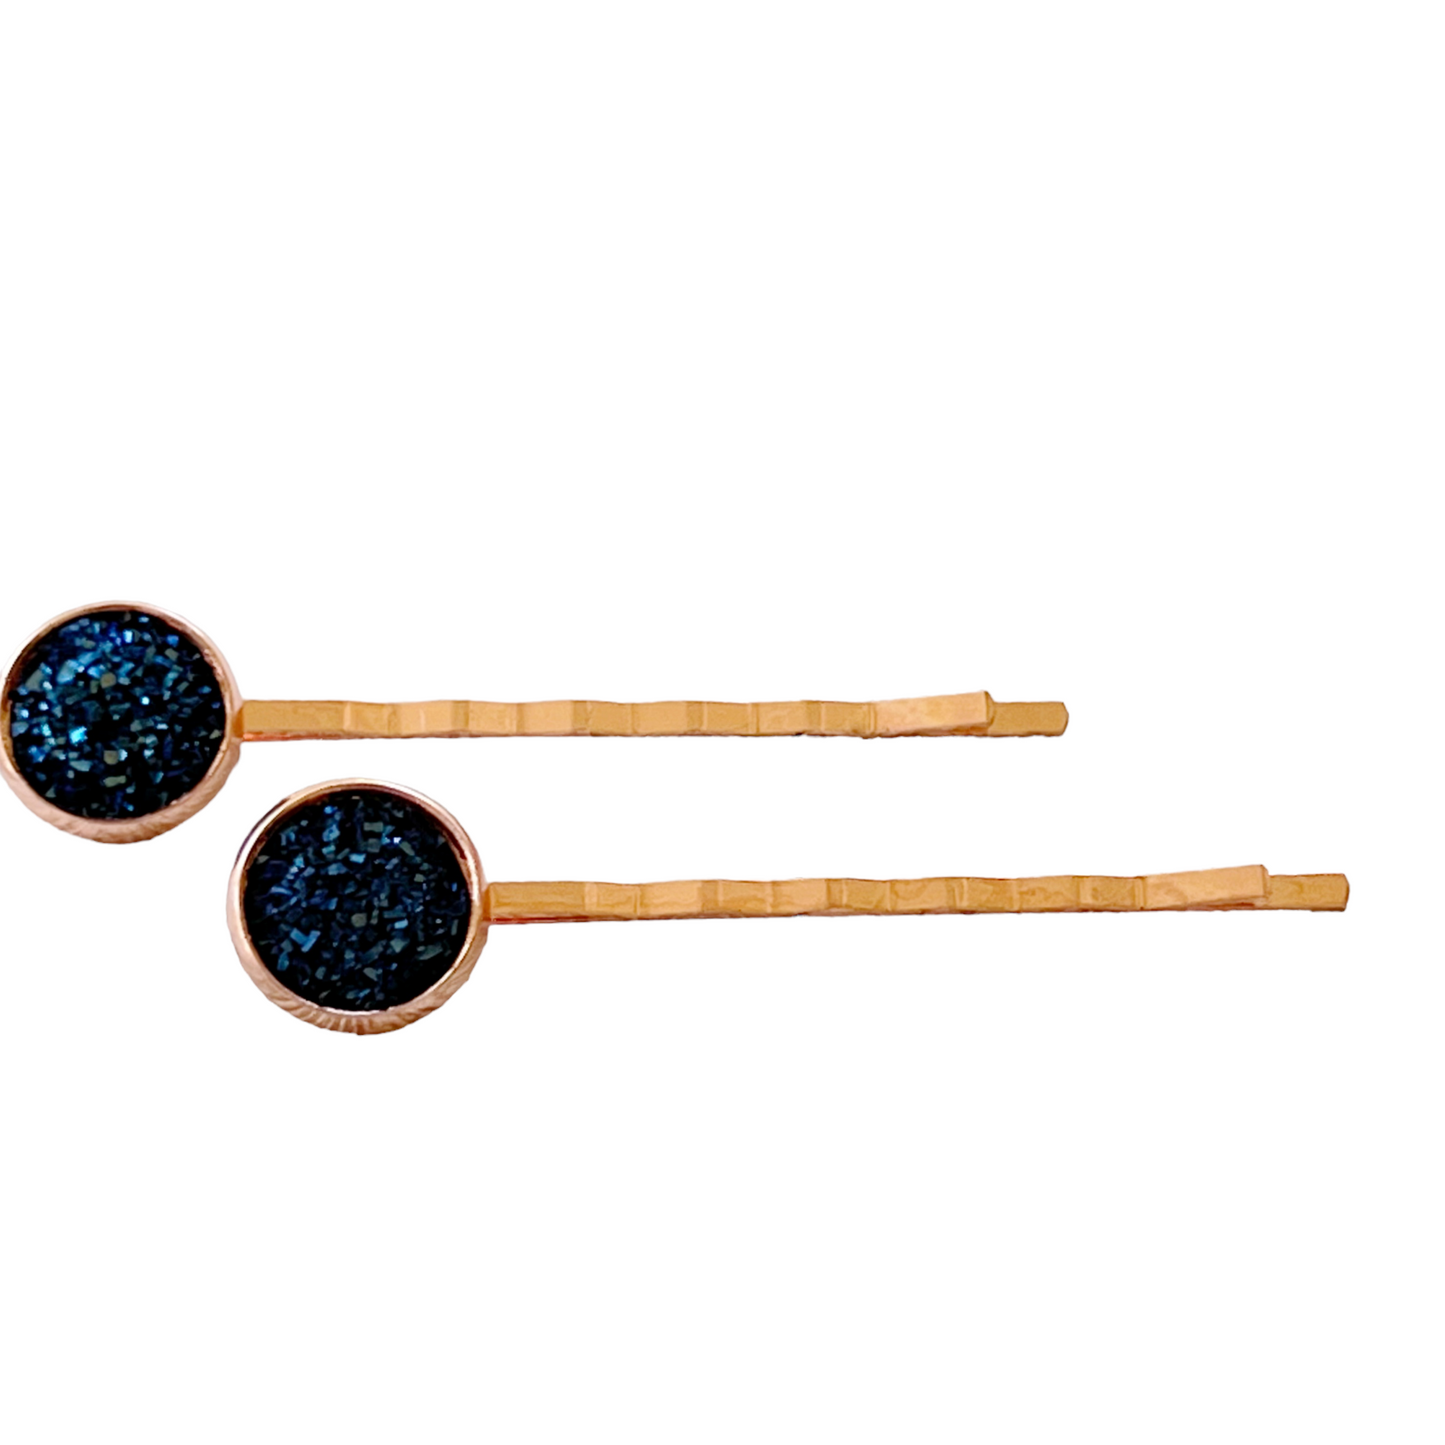 Cobalt Blue Druzy Rose Gold Hair Pins: Elegant & Vibrant Accessories